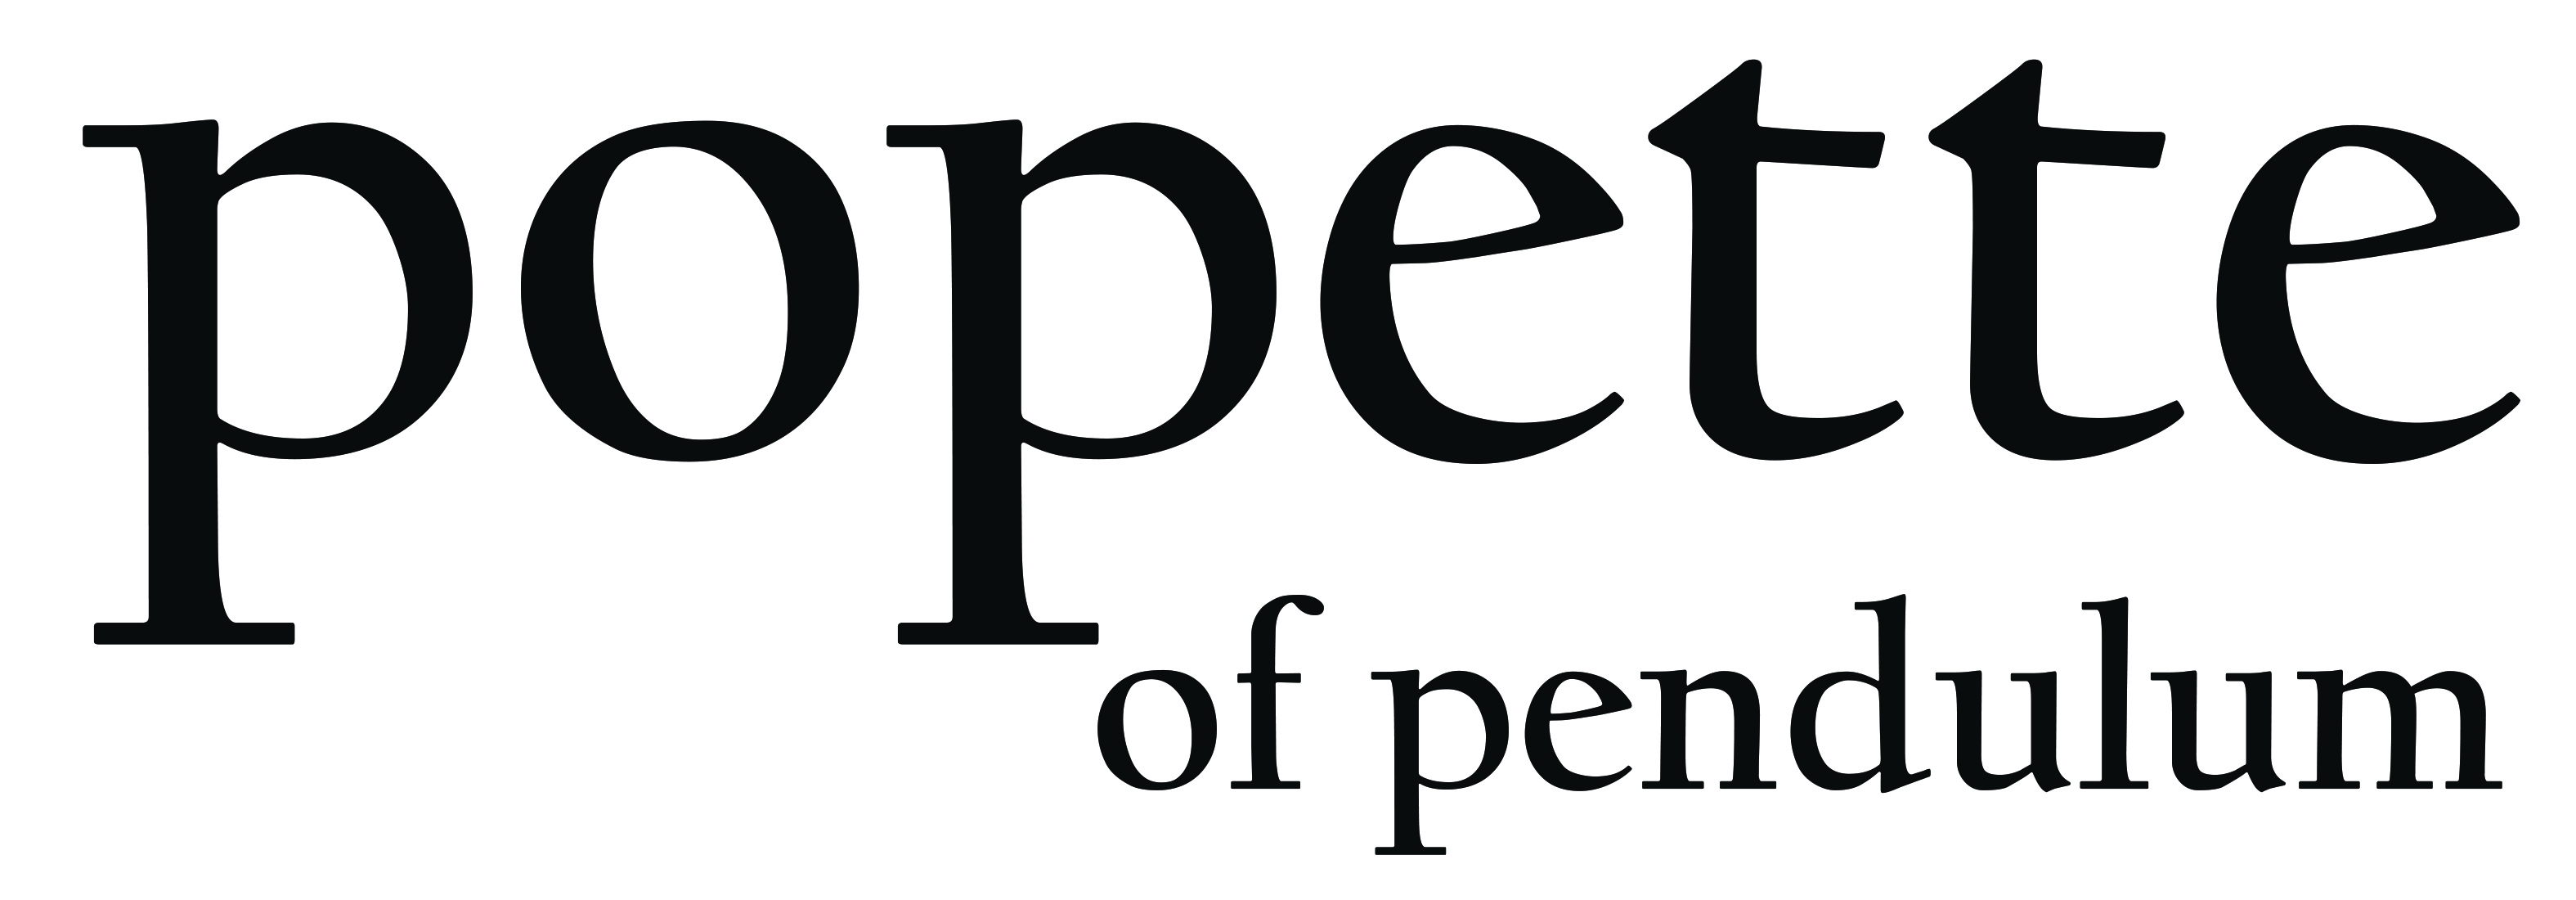 popette-of-pendulum-logo.jpg